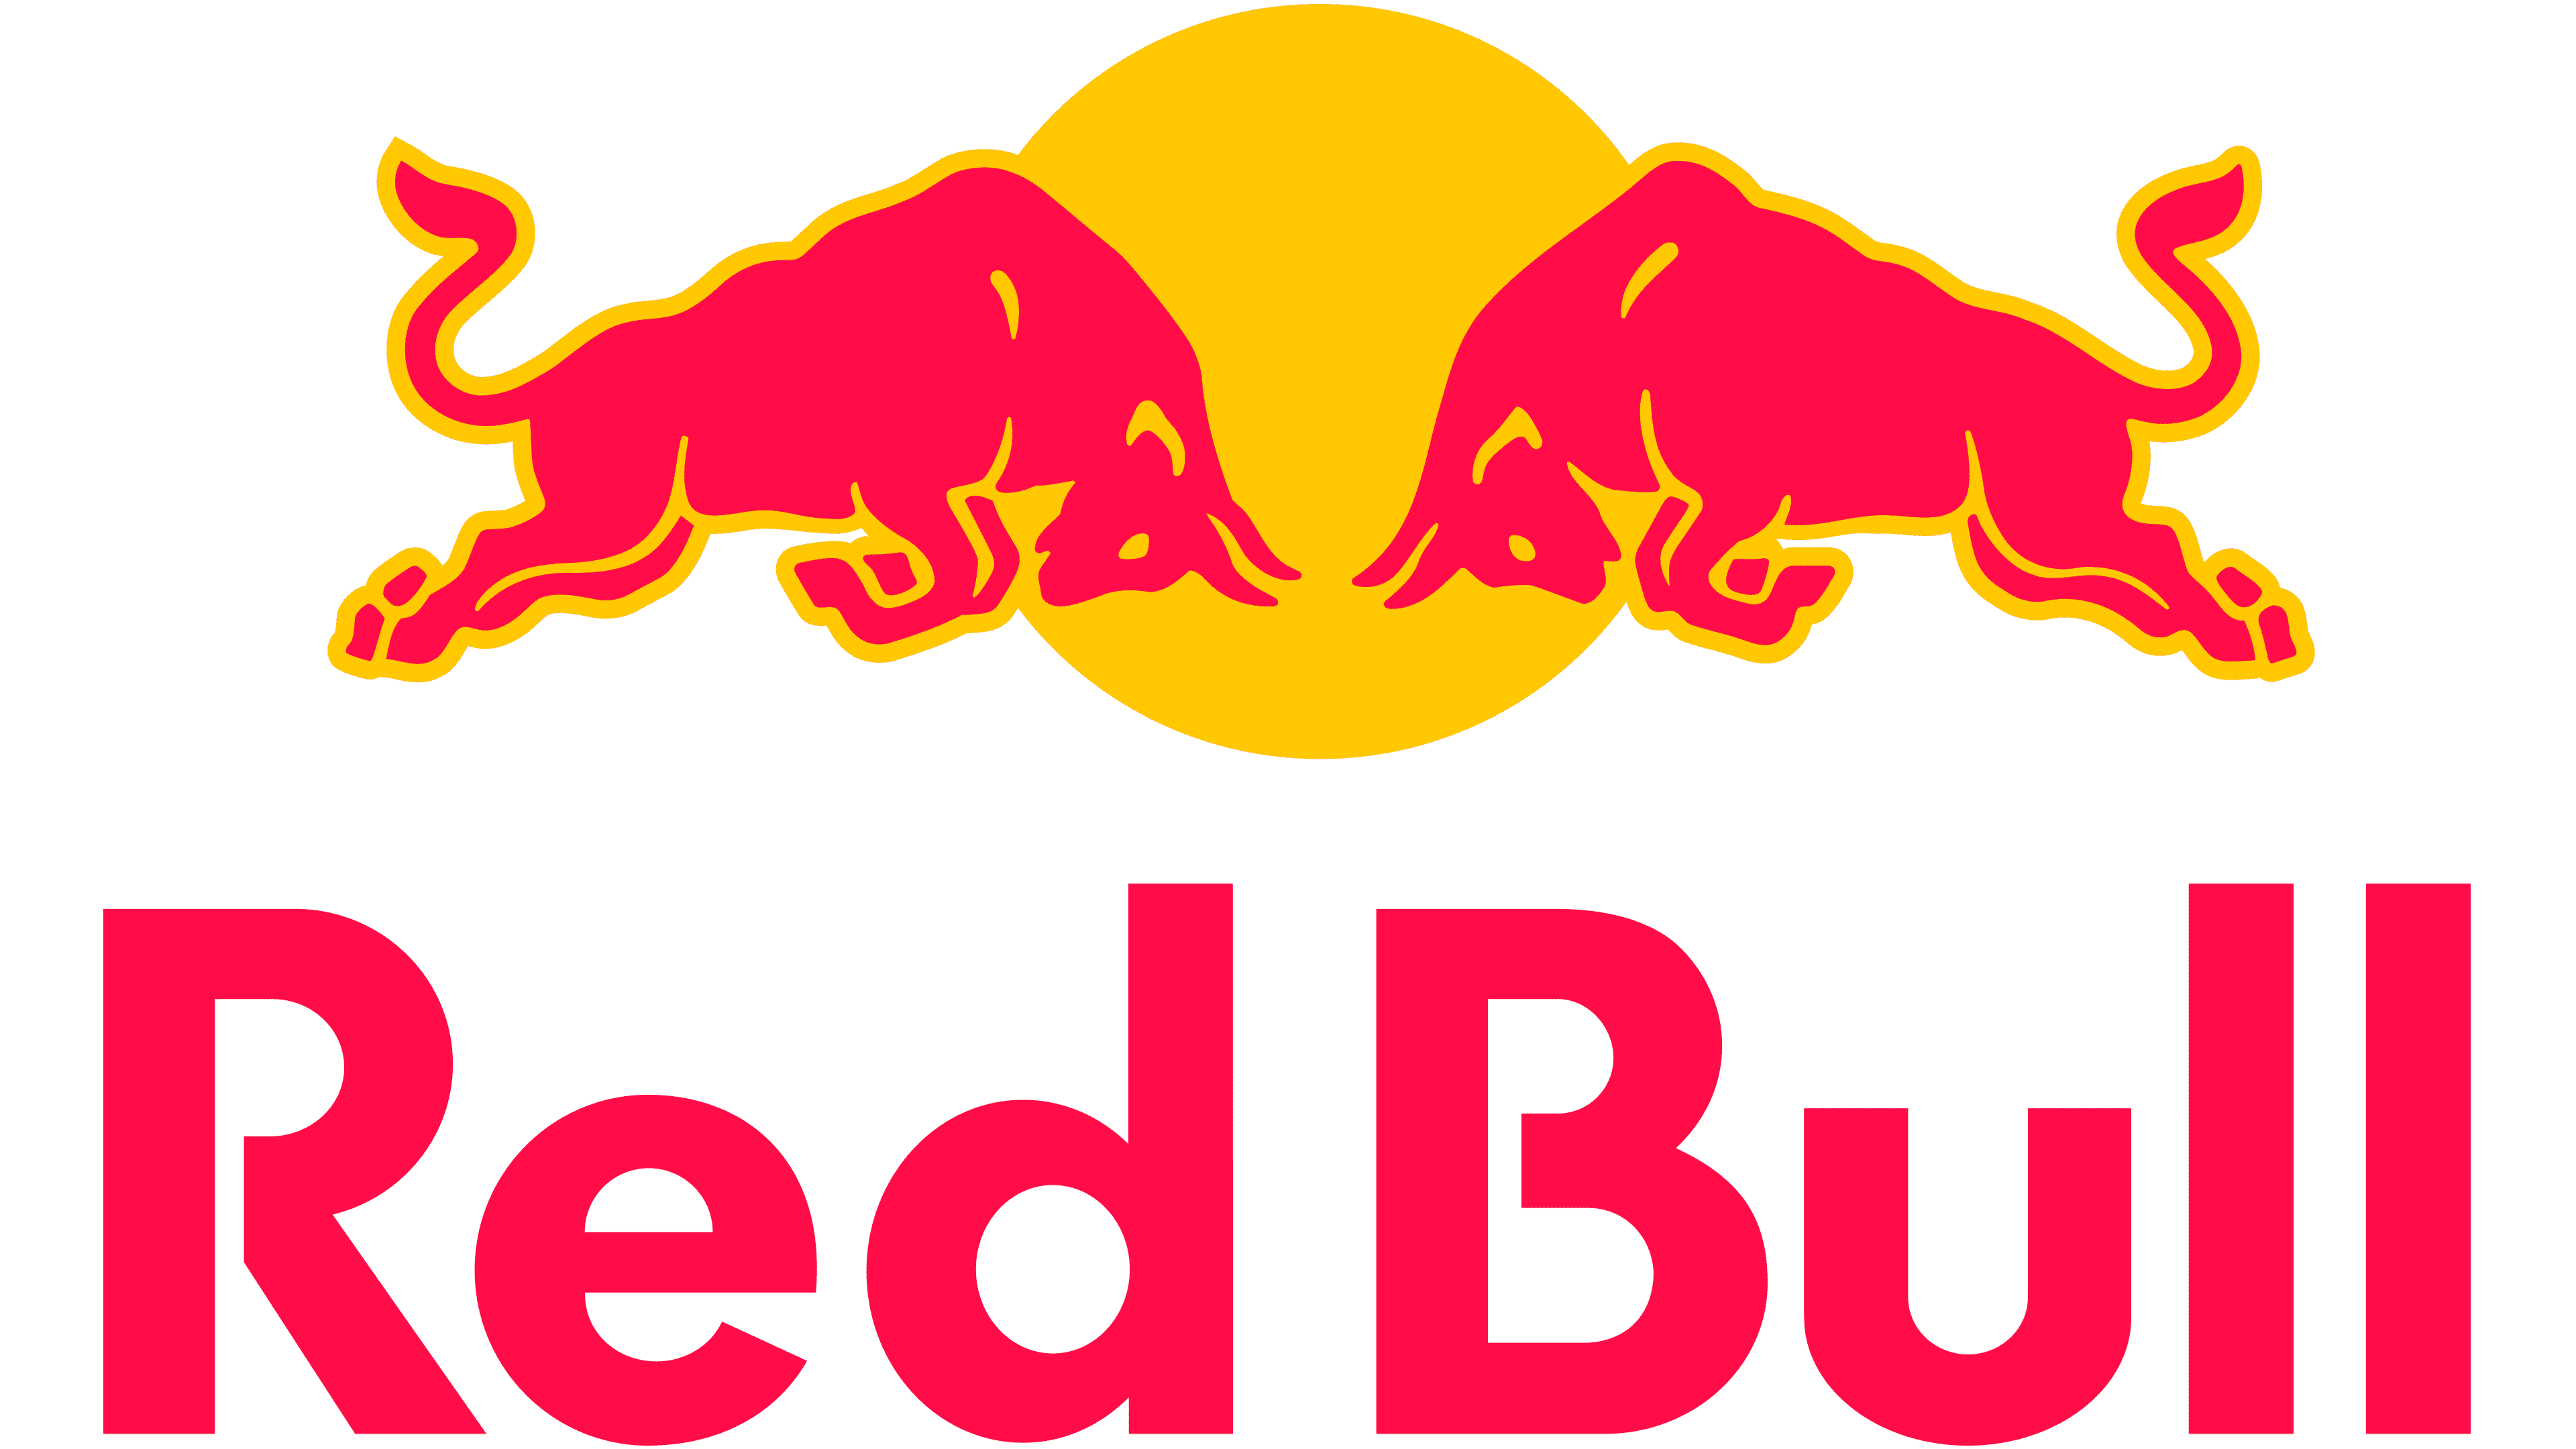 Free RedBulls Method